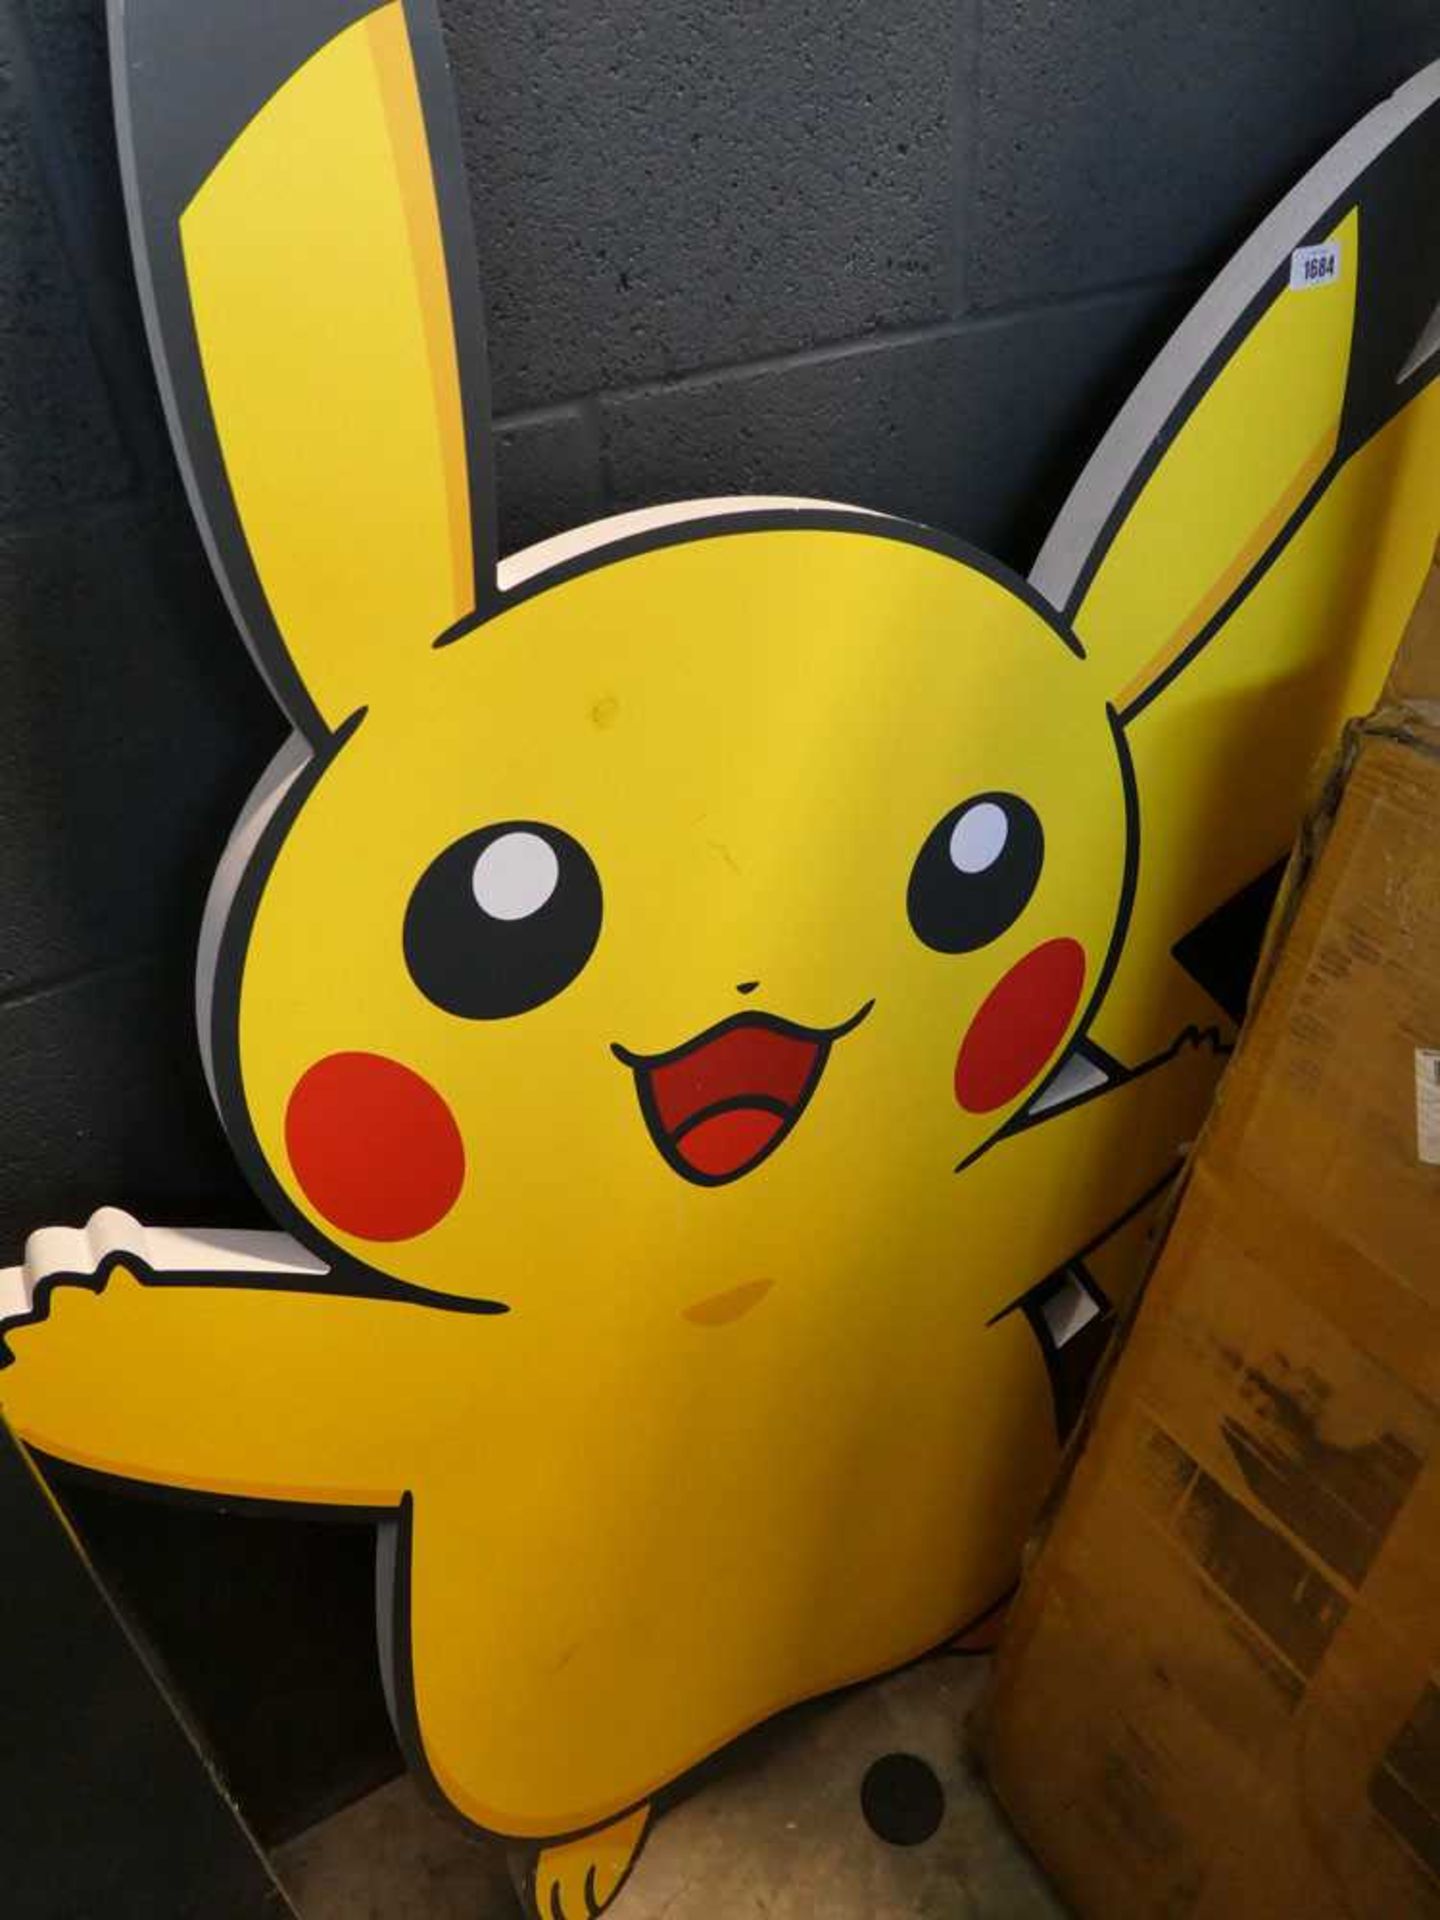 Pikachu character cutout